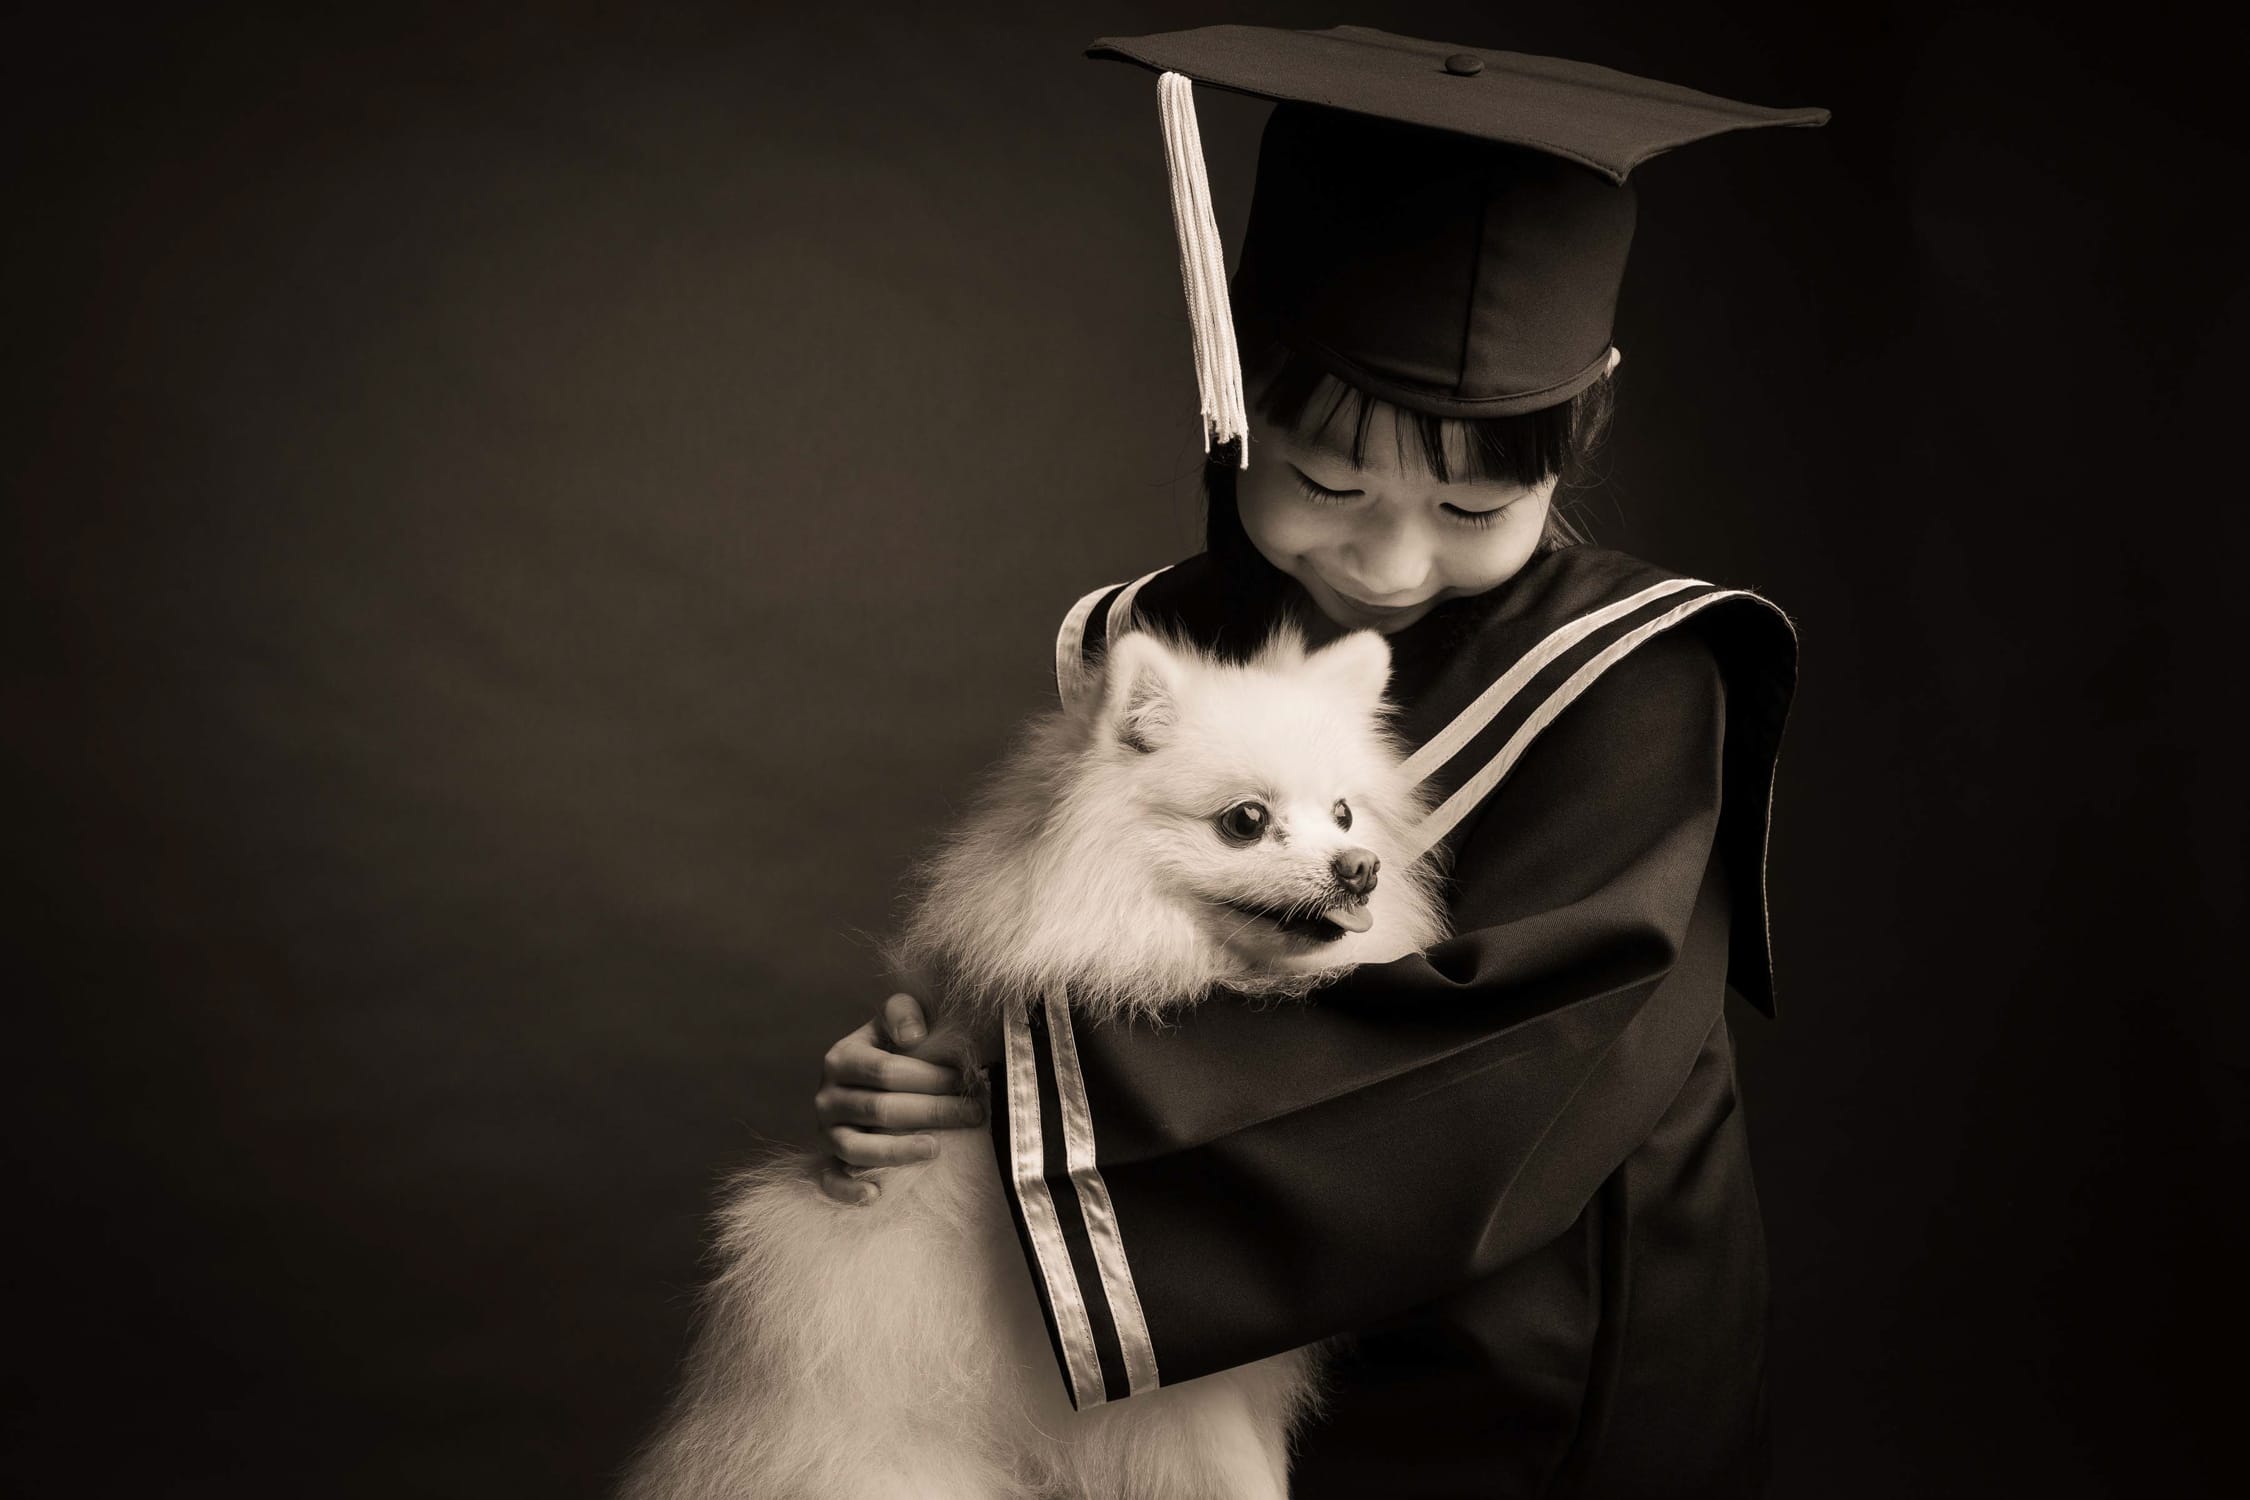 Girl in K2 kindergarten graduation gown and cap with her pet dog during a k2 kindergarten graduation photoshoot in Singapore Credit: White Room Studio